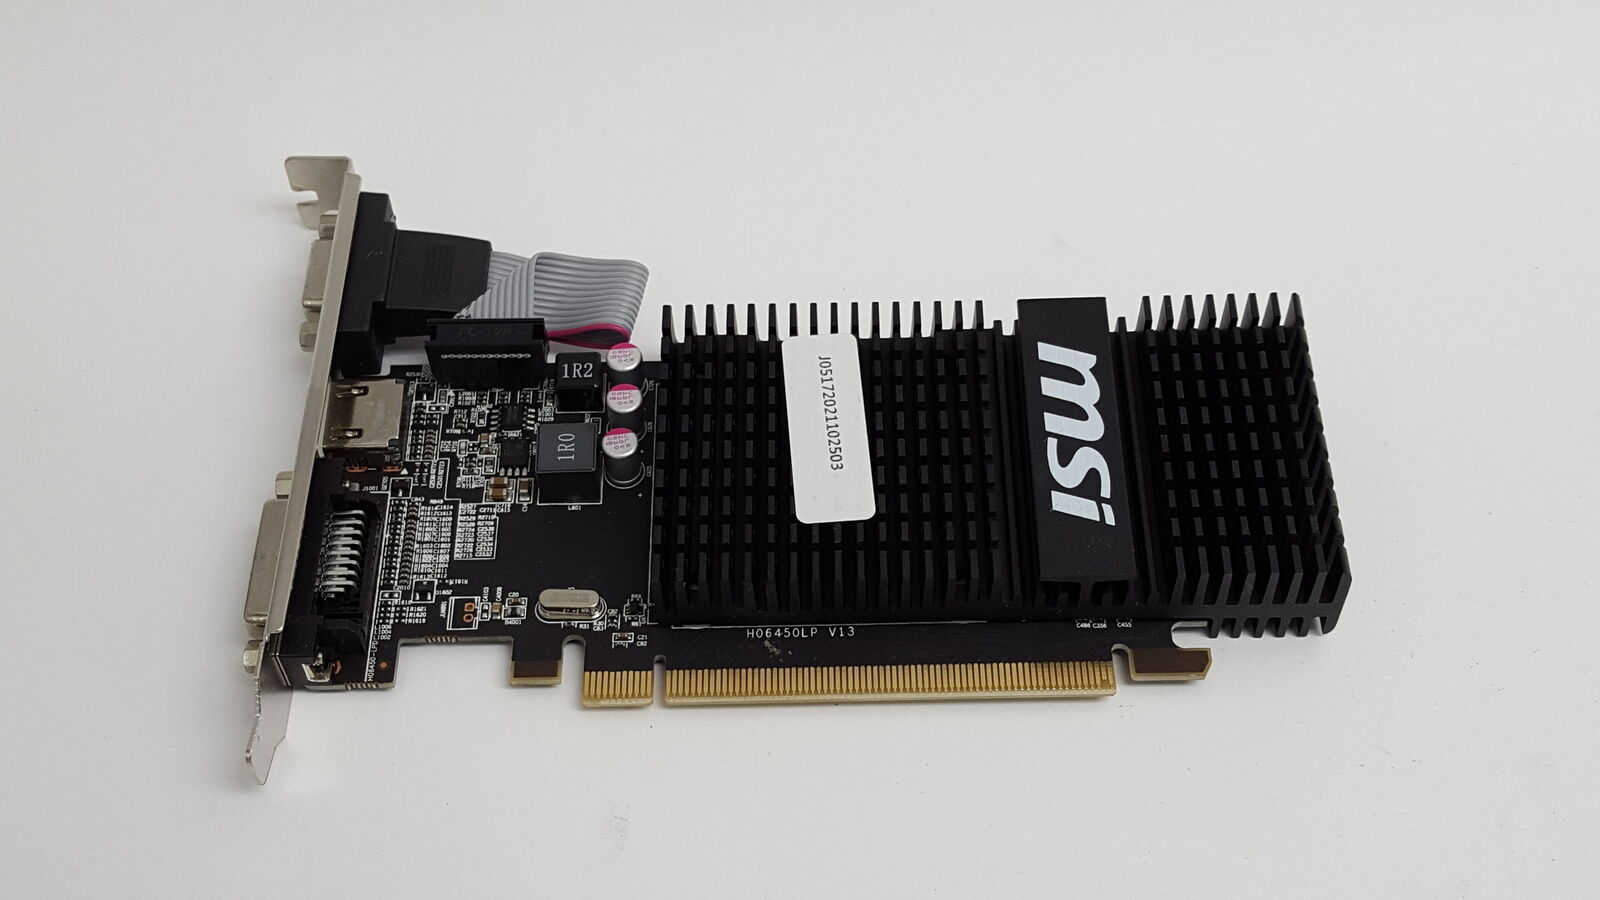 MSI ATI Radeon HD 6450 2 GB DDR3 PCI Express x16 Desktop Video Card